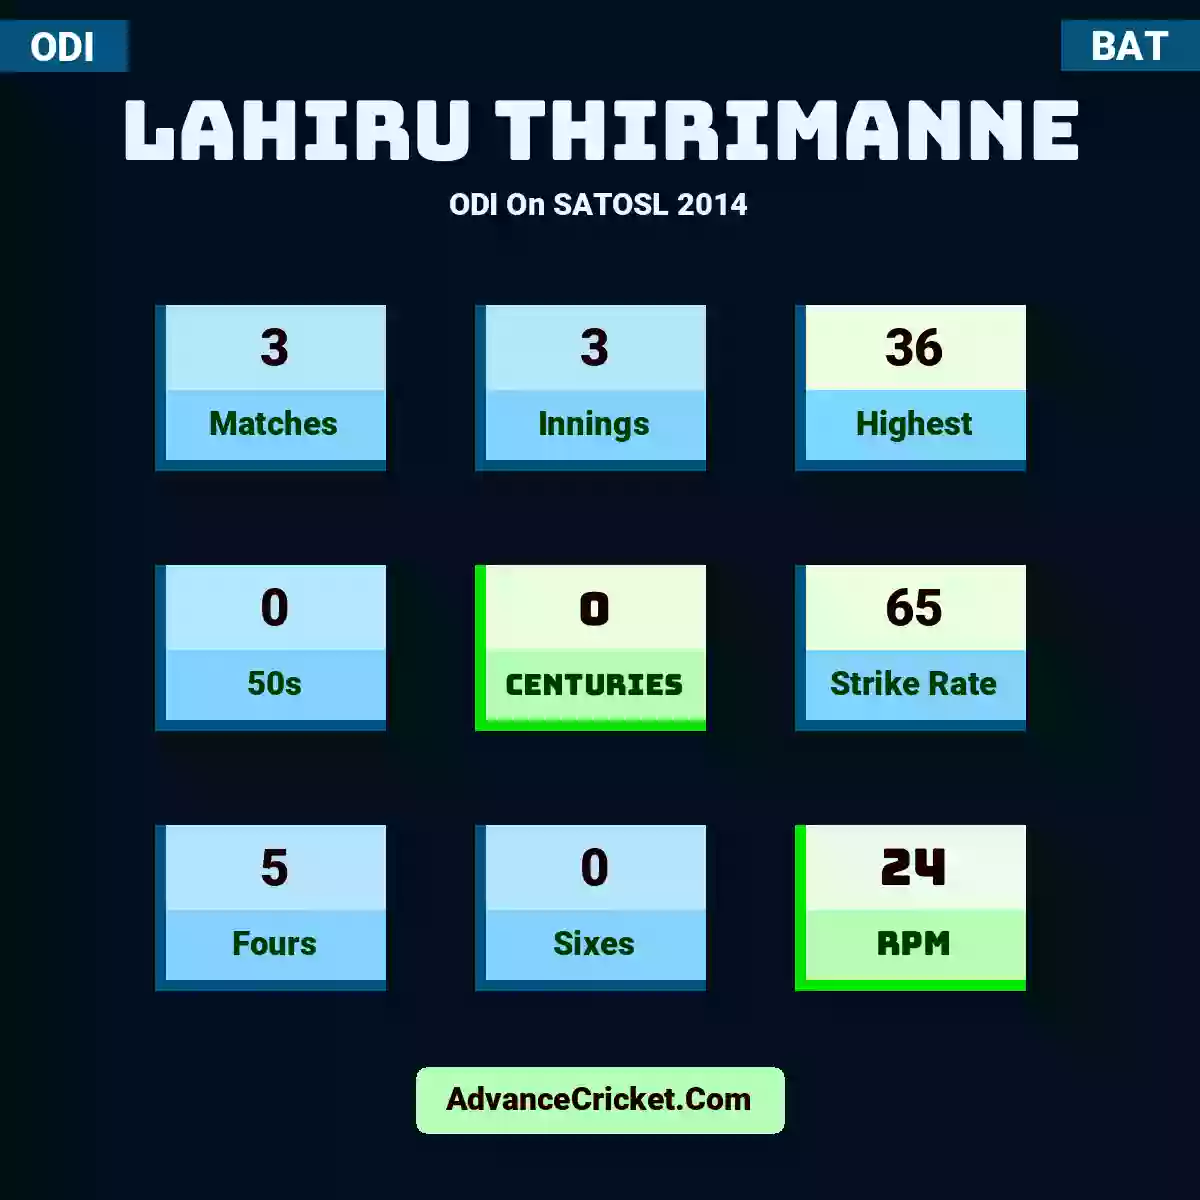 Lahiru Thirimanne ODI  On SATOSL 2014, Lahiru Thirimanne played 3 matches, scored 36 runs as highest, 0 half-centuries, and 0 centuries, with a strike rate of 65. L.Thirimanne hit 5 fours and 0 sixes, with an RPM of 24.